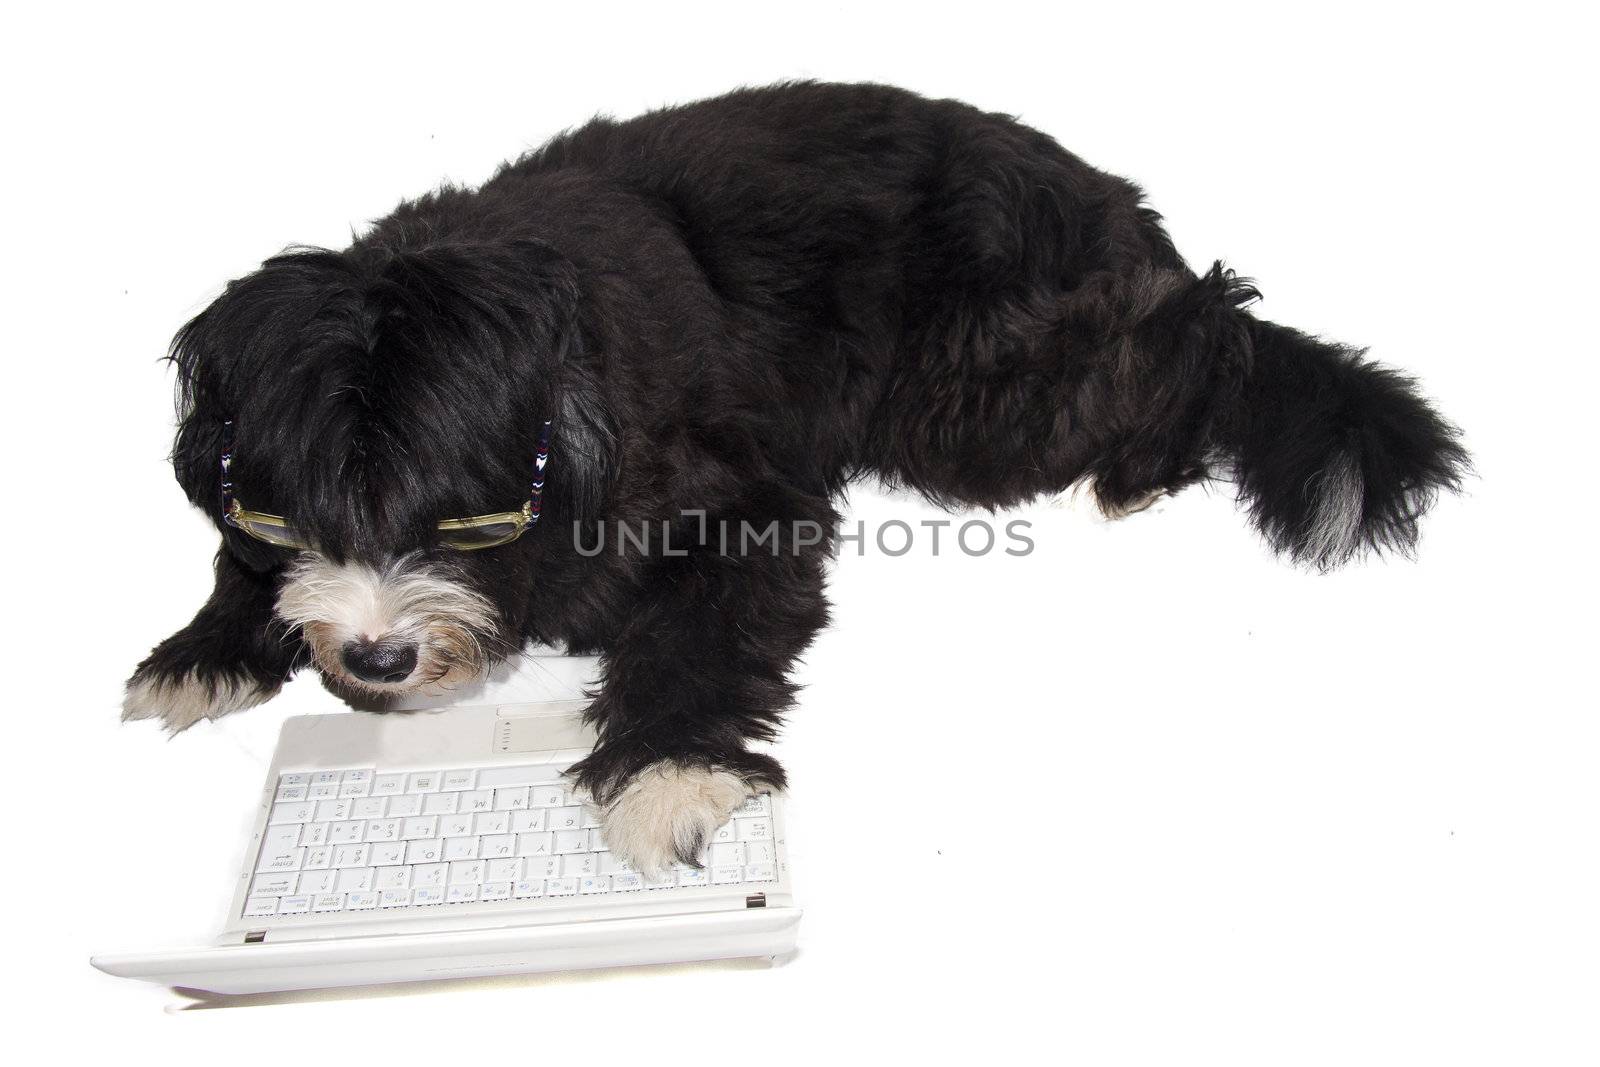 internet dog by danilobiancalana